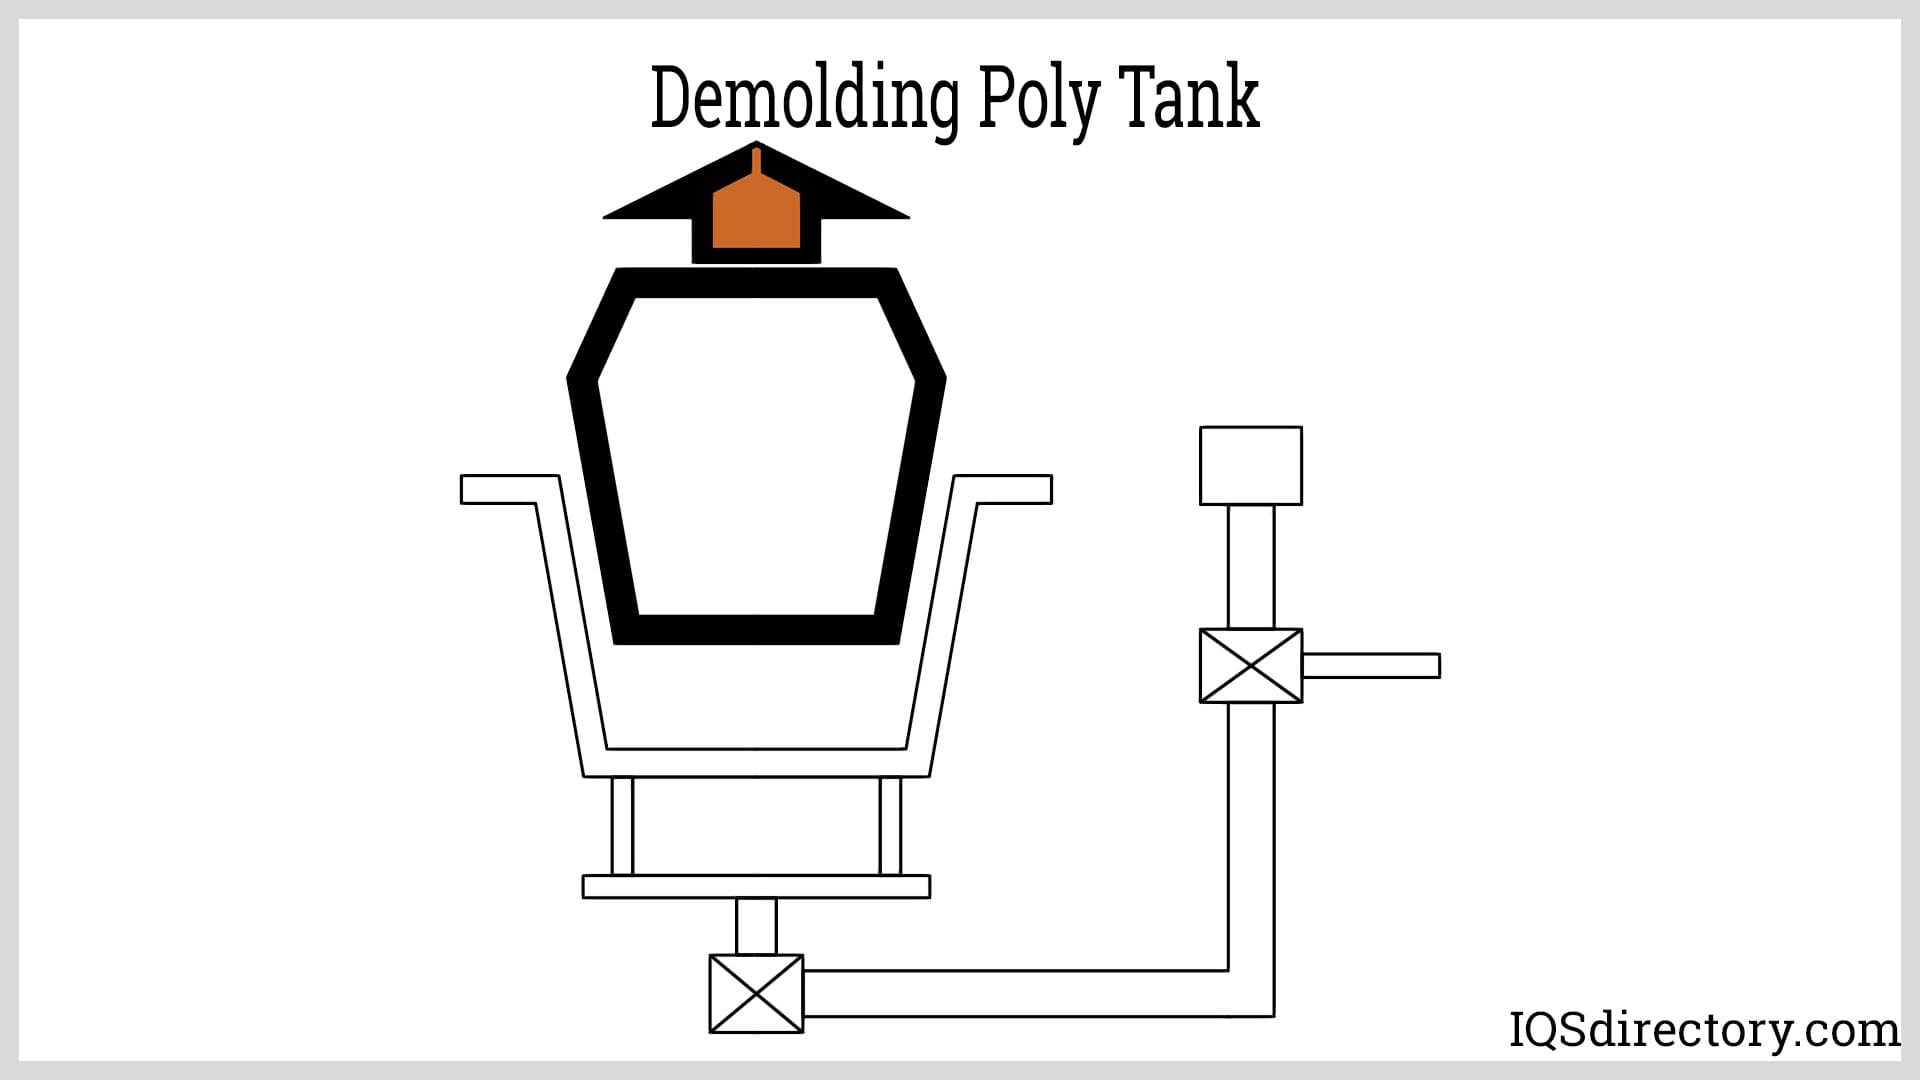 Demolding Poly Tank